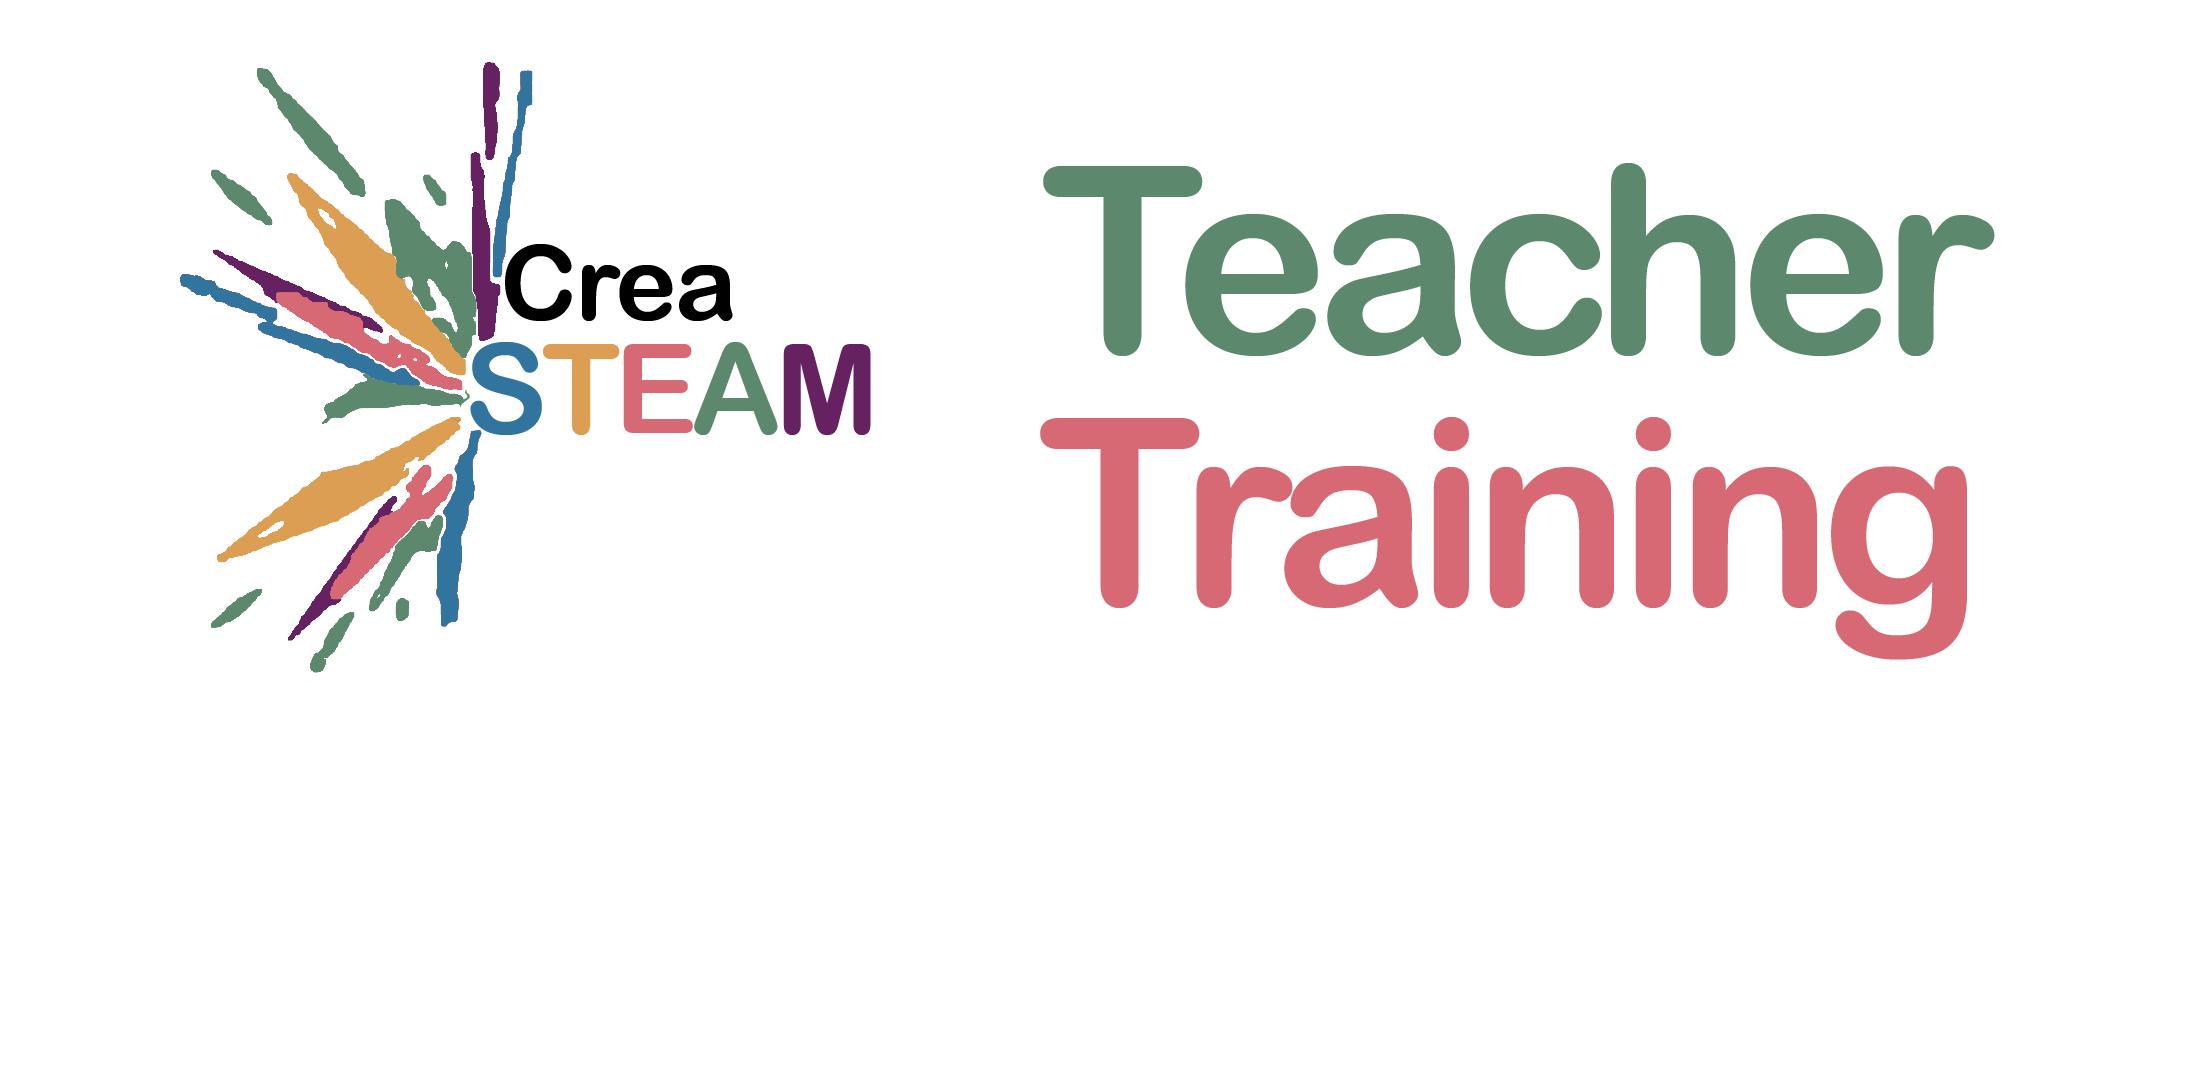 CreaSTEAM Project - Teacher Training